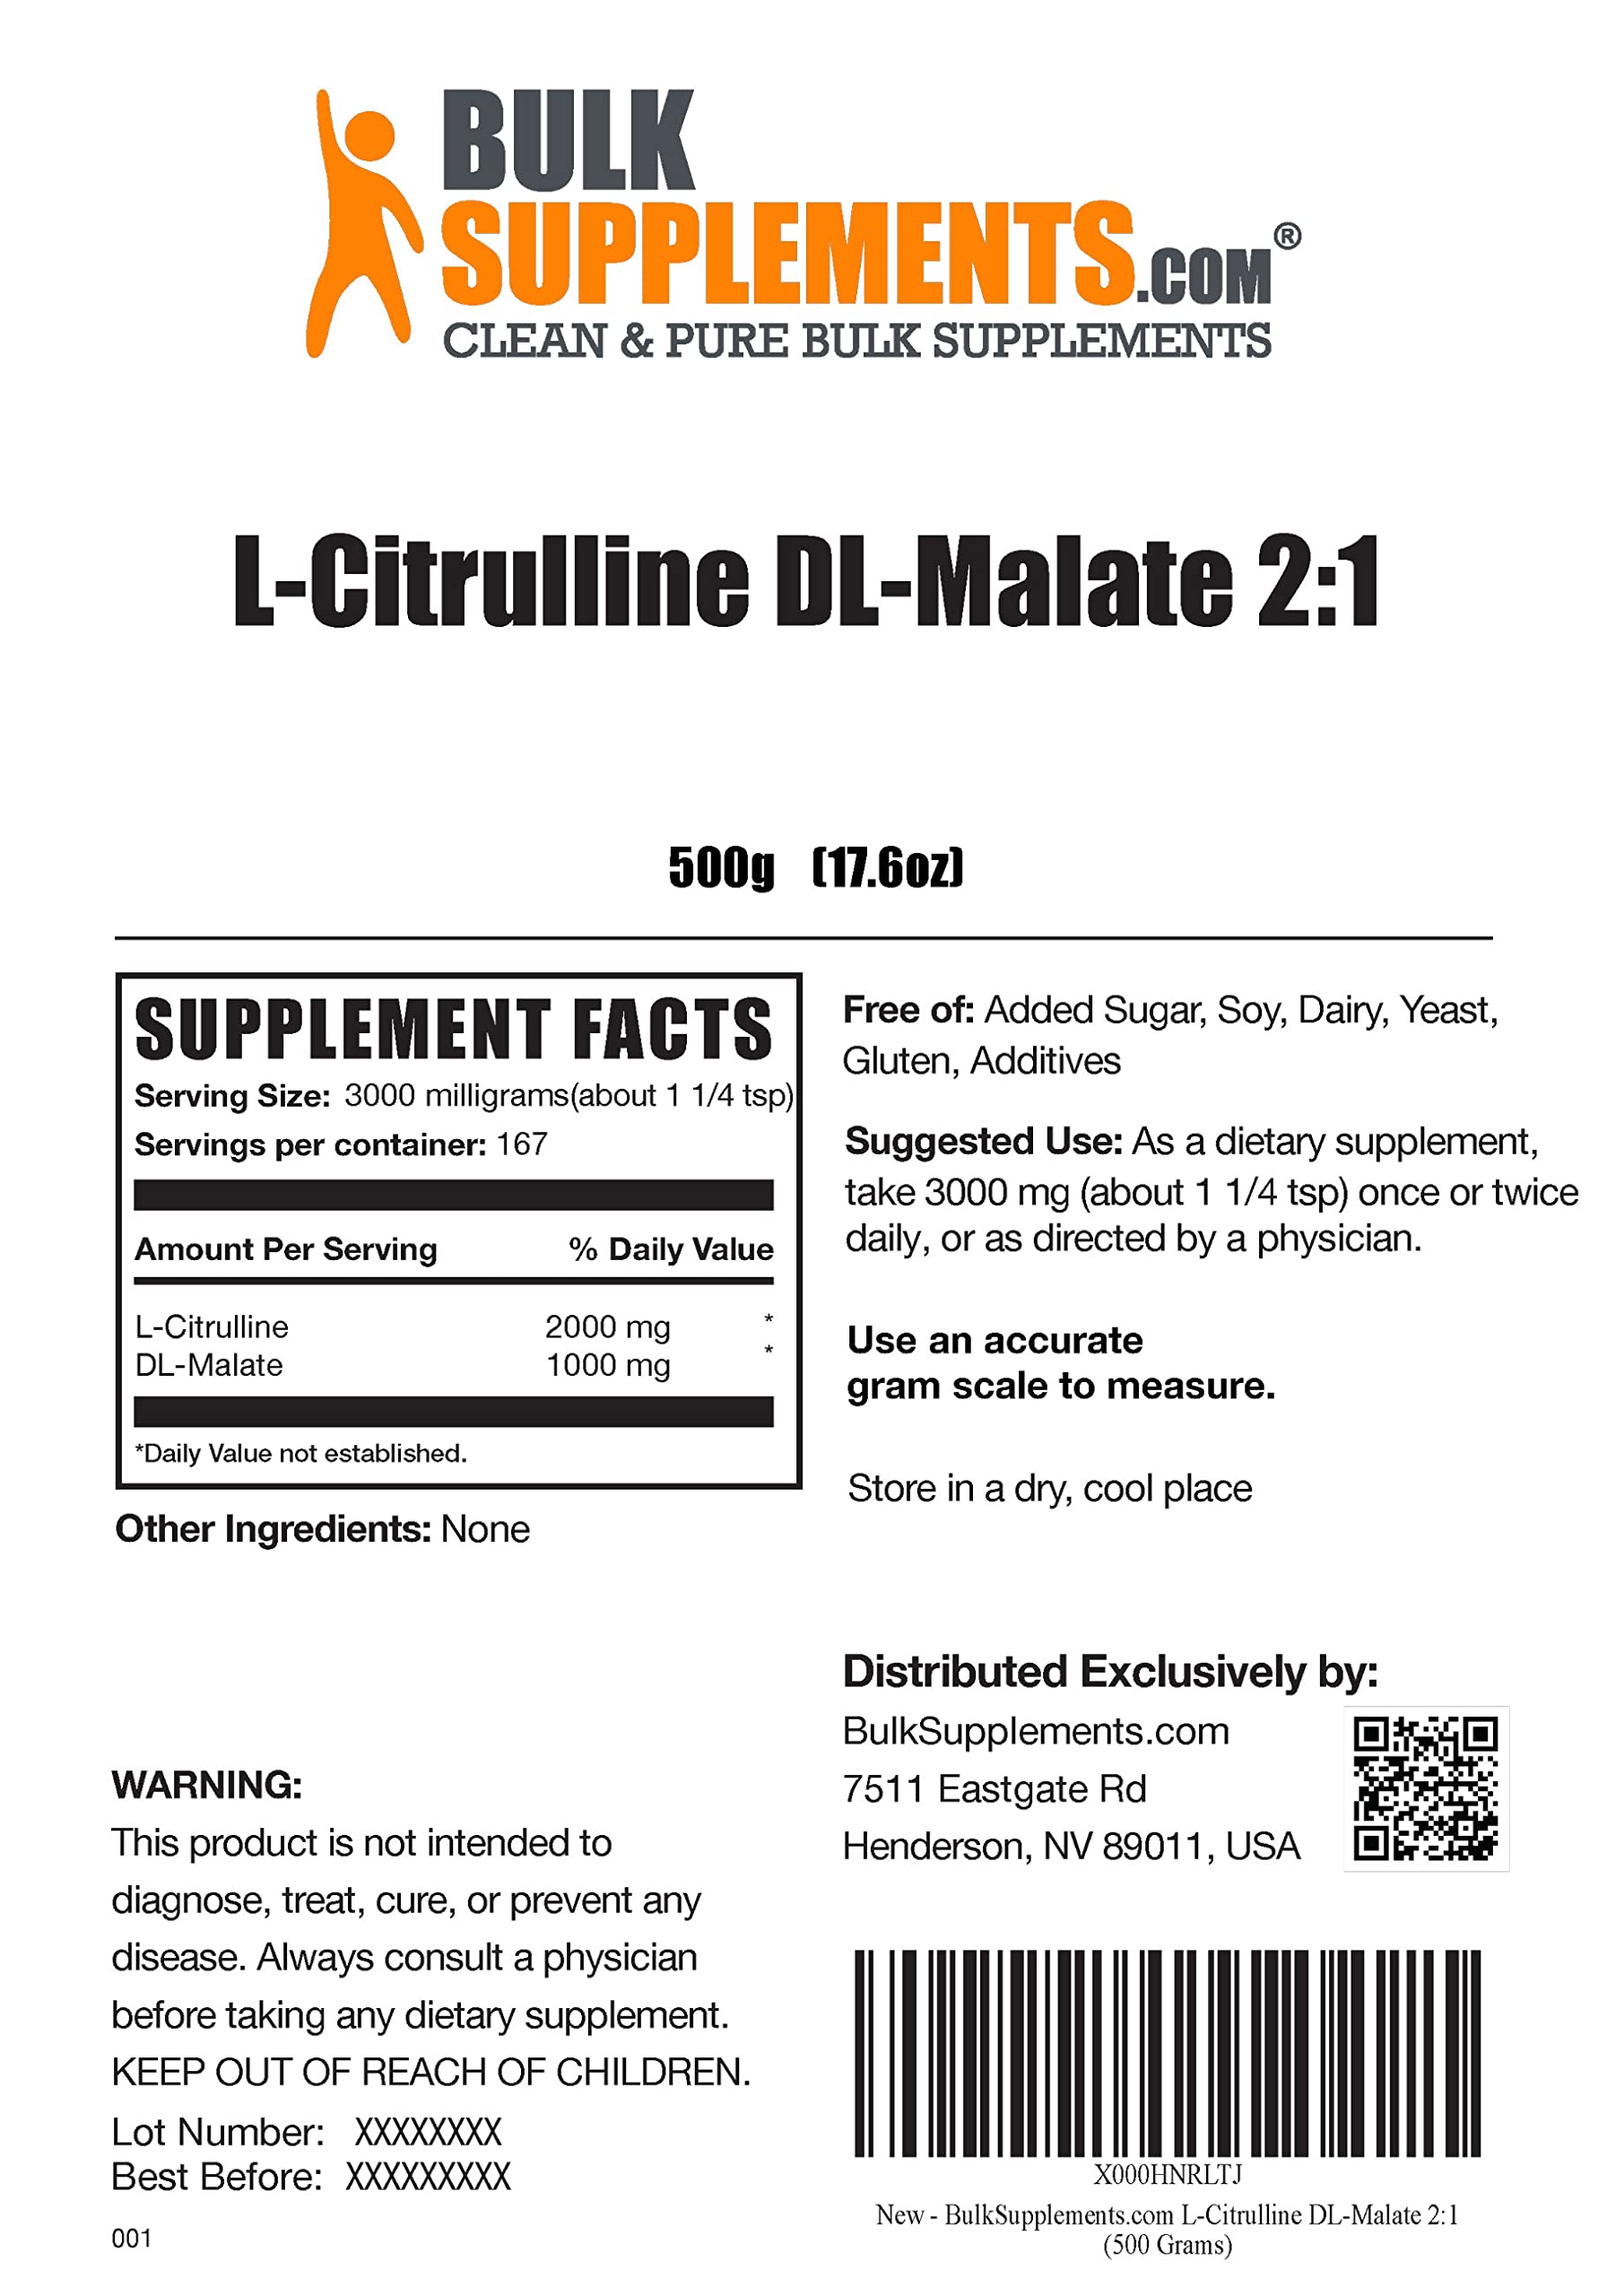 BULKSUPPLEMENTS.COM L-Citrulline Malate 2:1 Powder, 500g, with Creatine Monohydrate Powder (Micronized Creatine), 500g Bundles